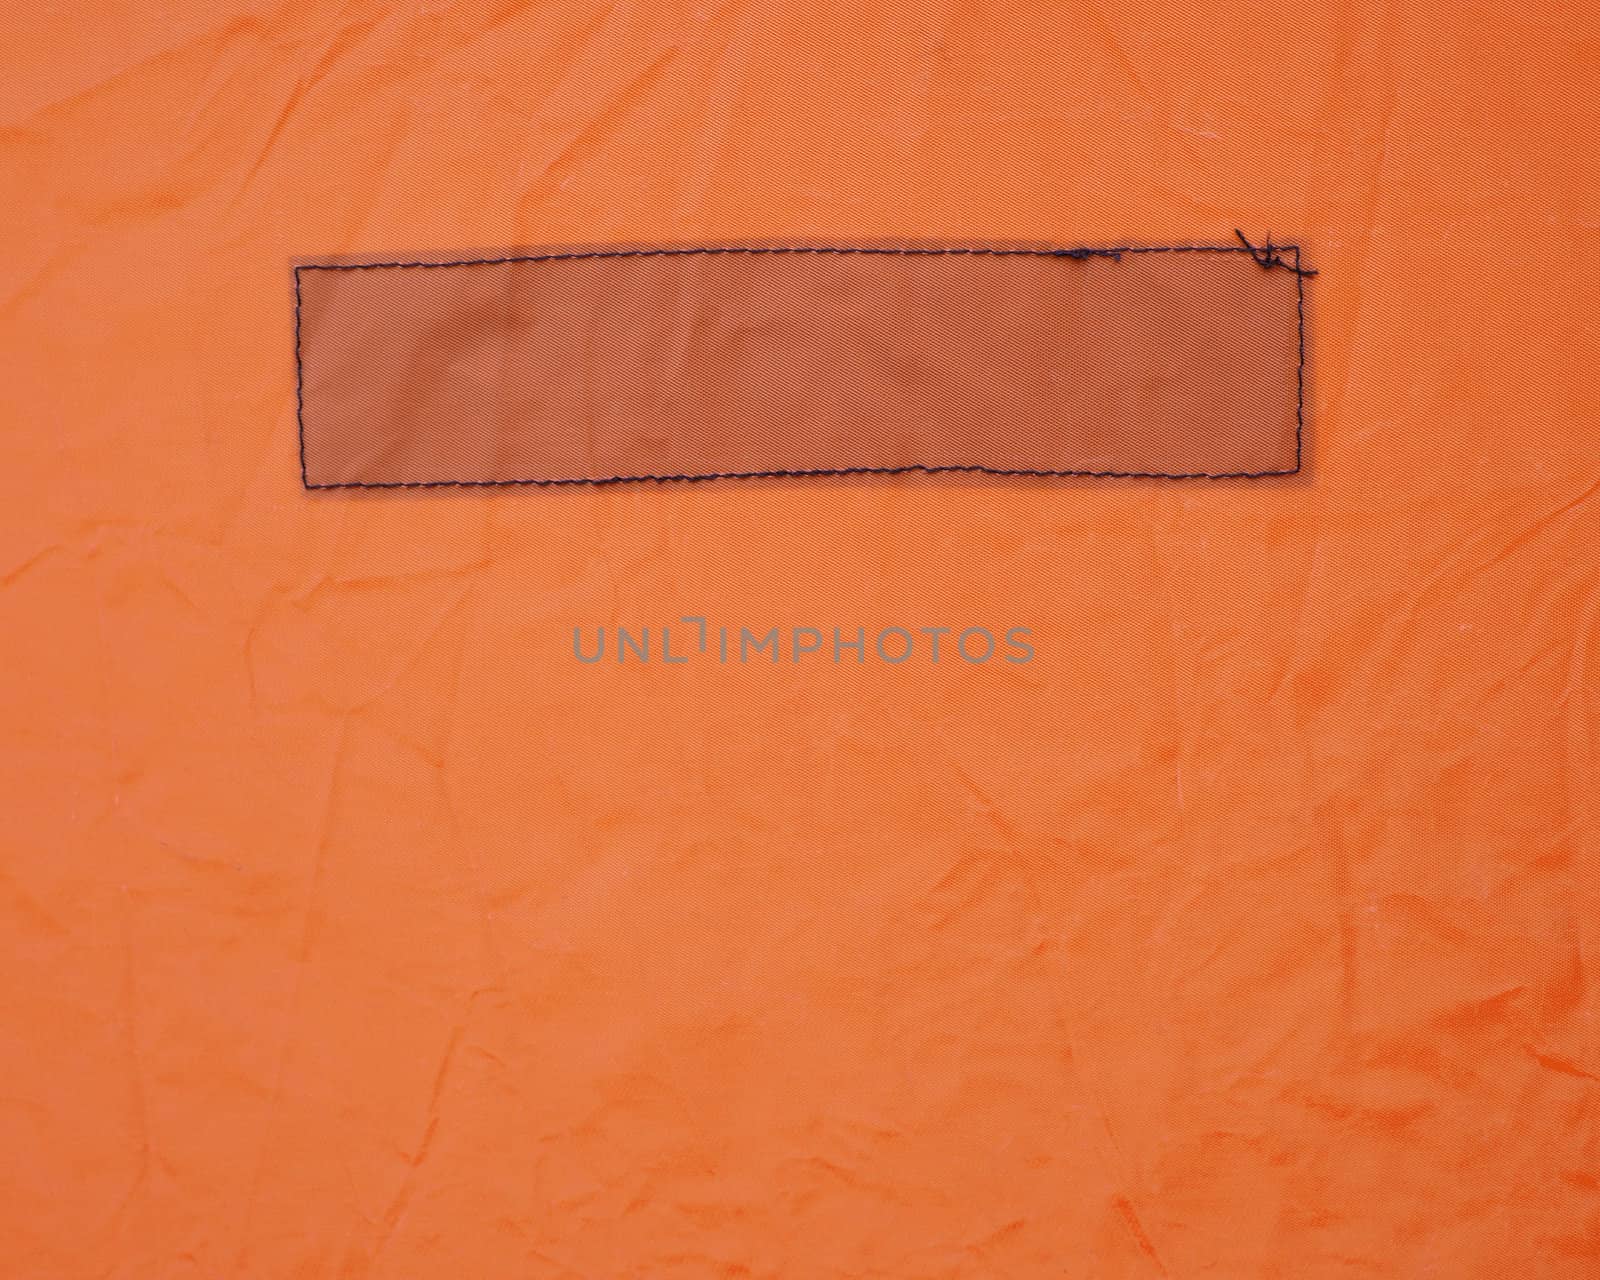 Rectangle stitched on a heavy orange vinyl fabric